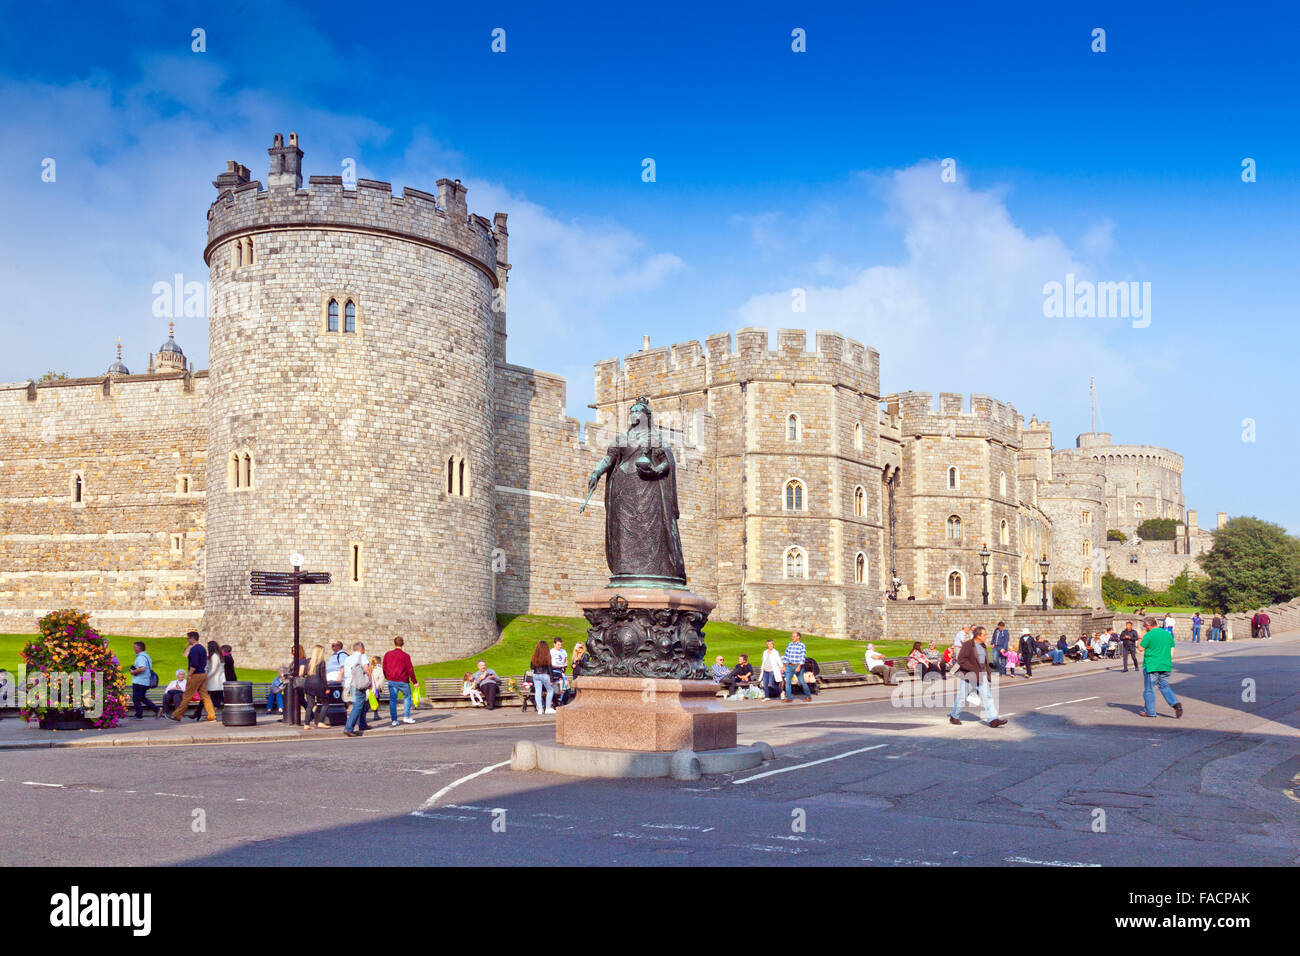 The Queen Victoria statue in front of Windsor Castle, Berkshire, England, UK Stock Photo